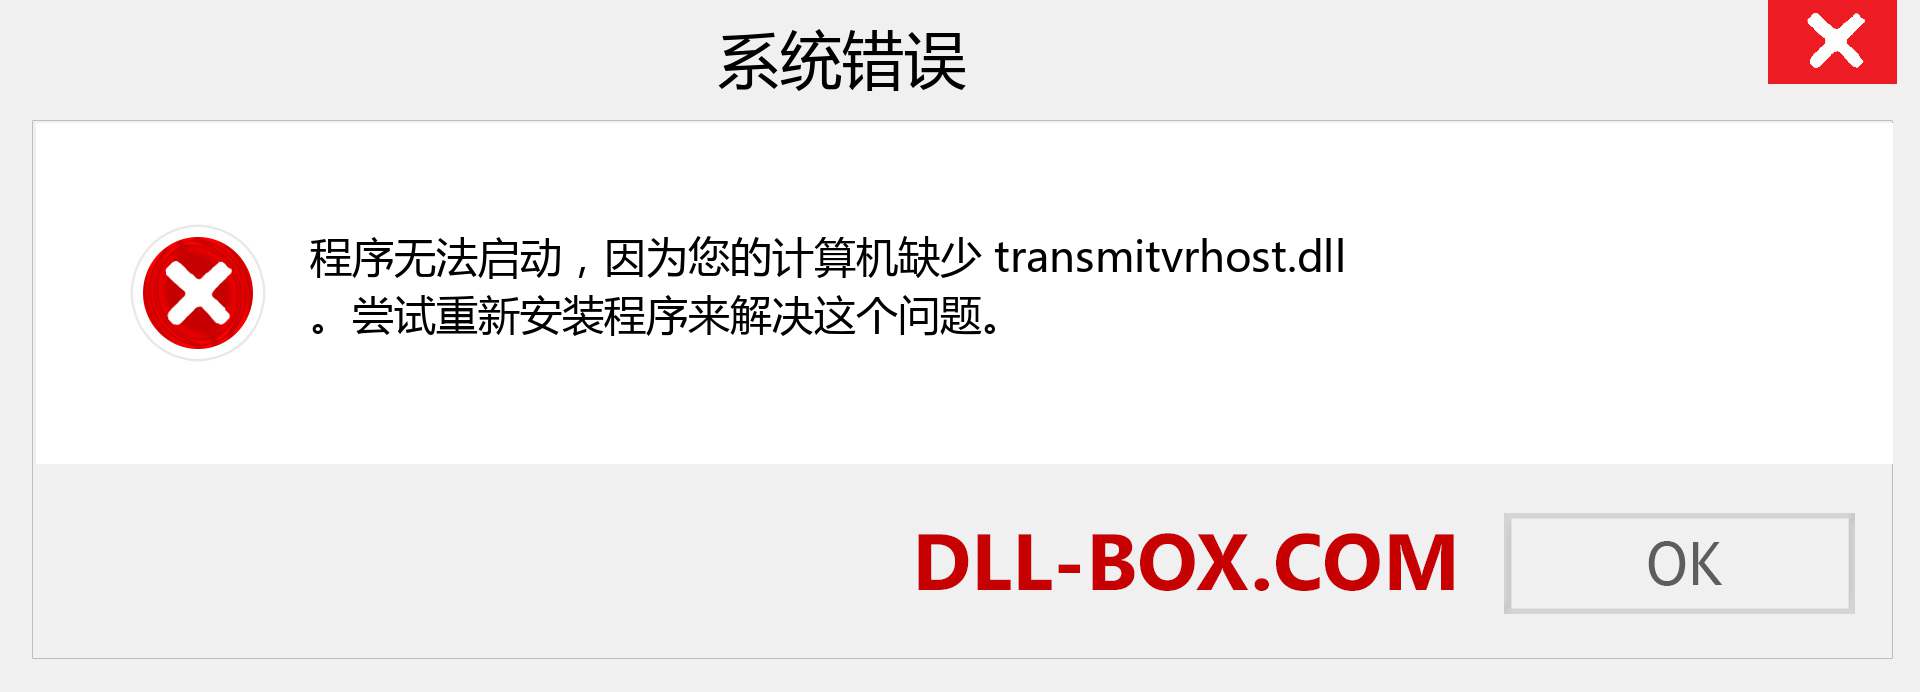 transmitvrhost.dll 文件丢失？。 适用于 Windows 7、8、10 的下载 - 修复 Windows、照片、图像上的 transmitvrhost dll 丢失错误